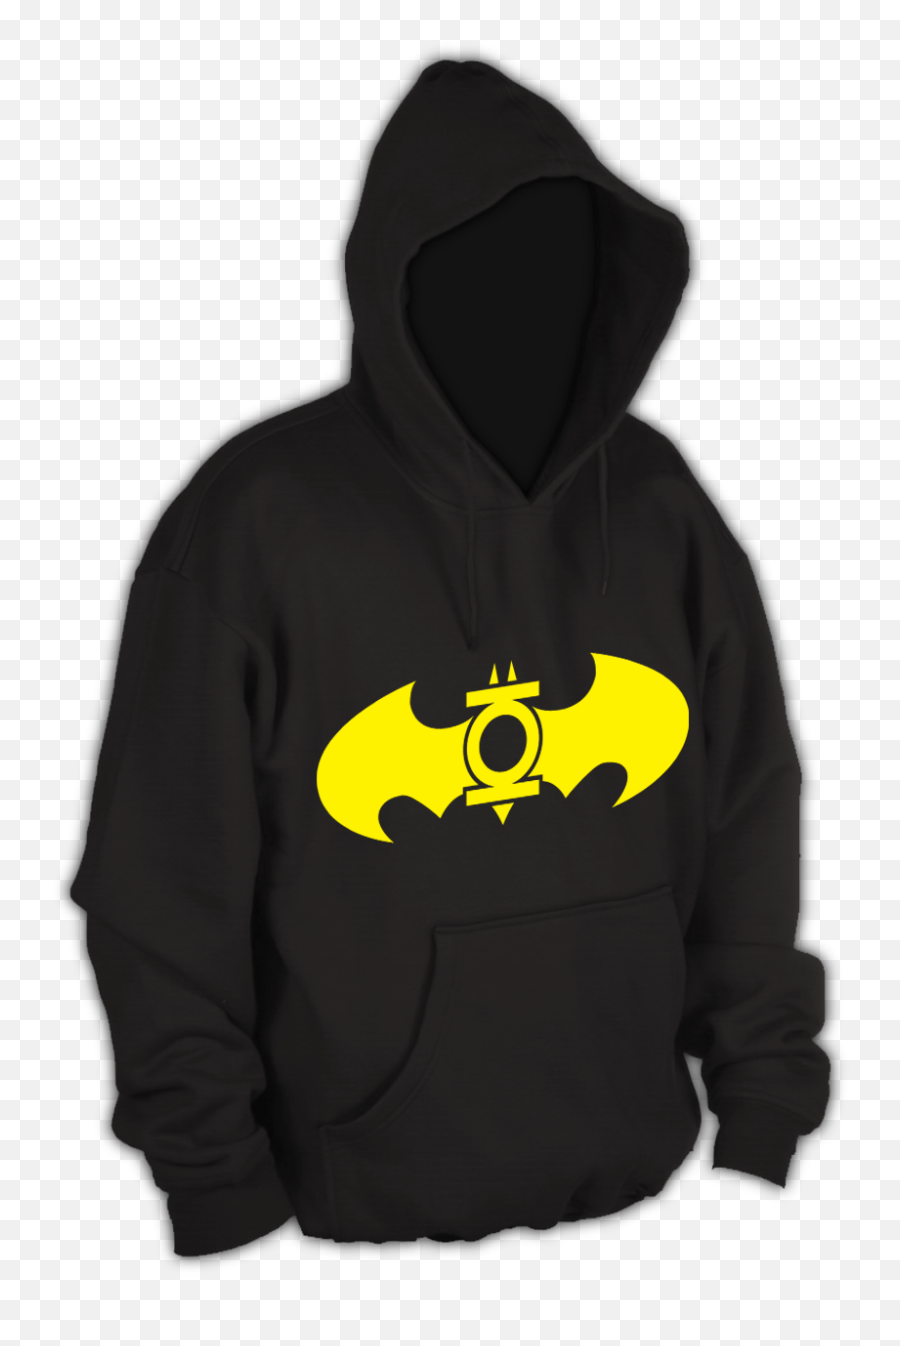 Batman Hoodie From The Movie The Dark Knight In White Emoji,Dark Knight Png